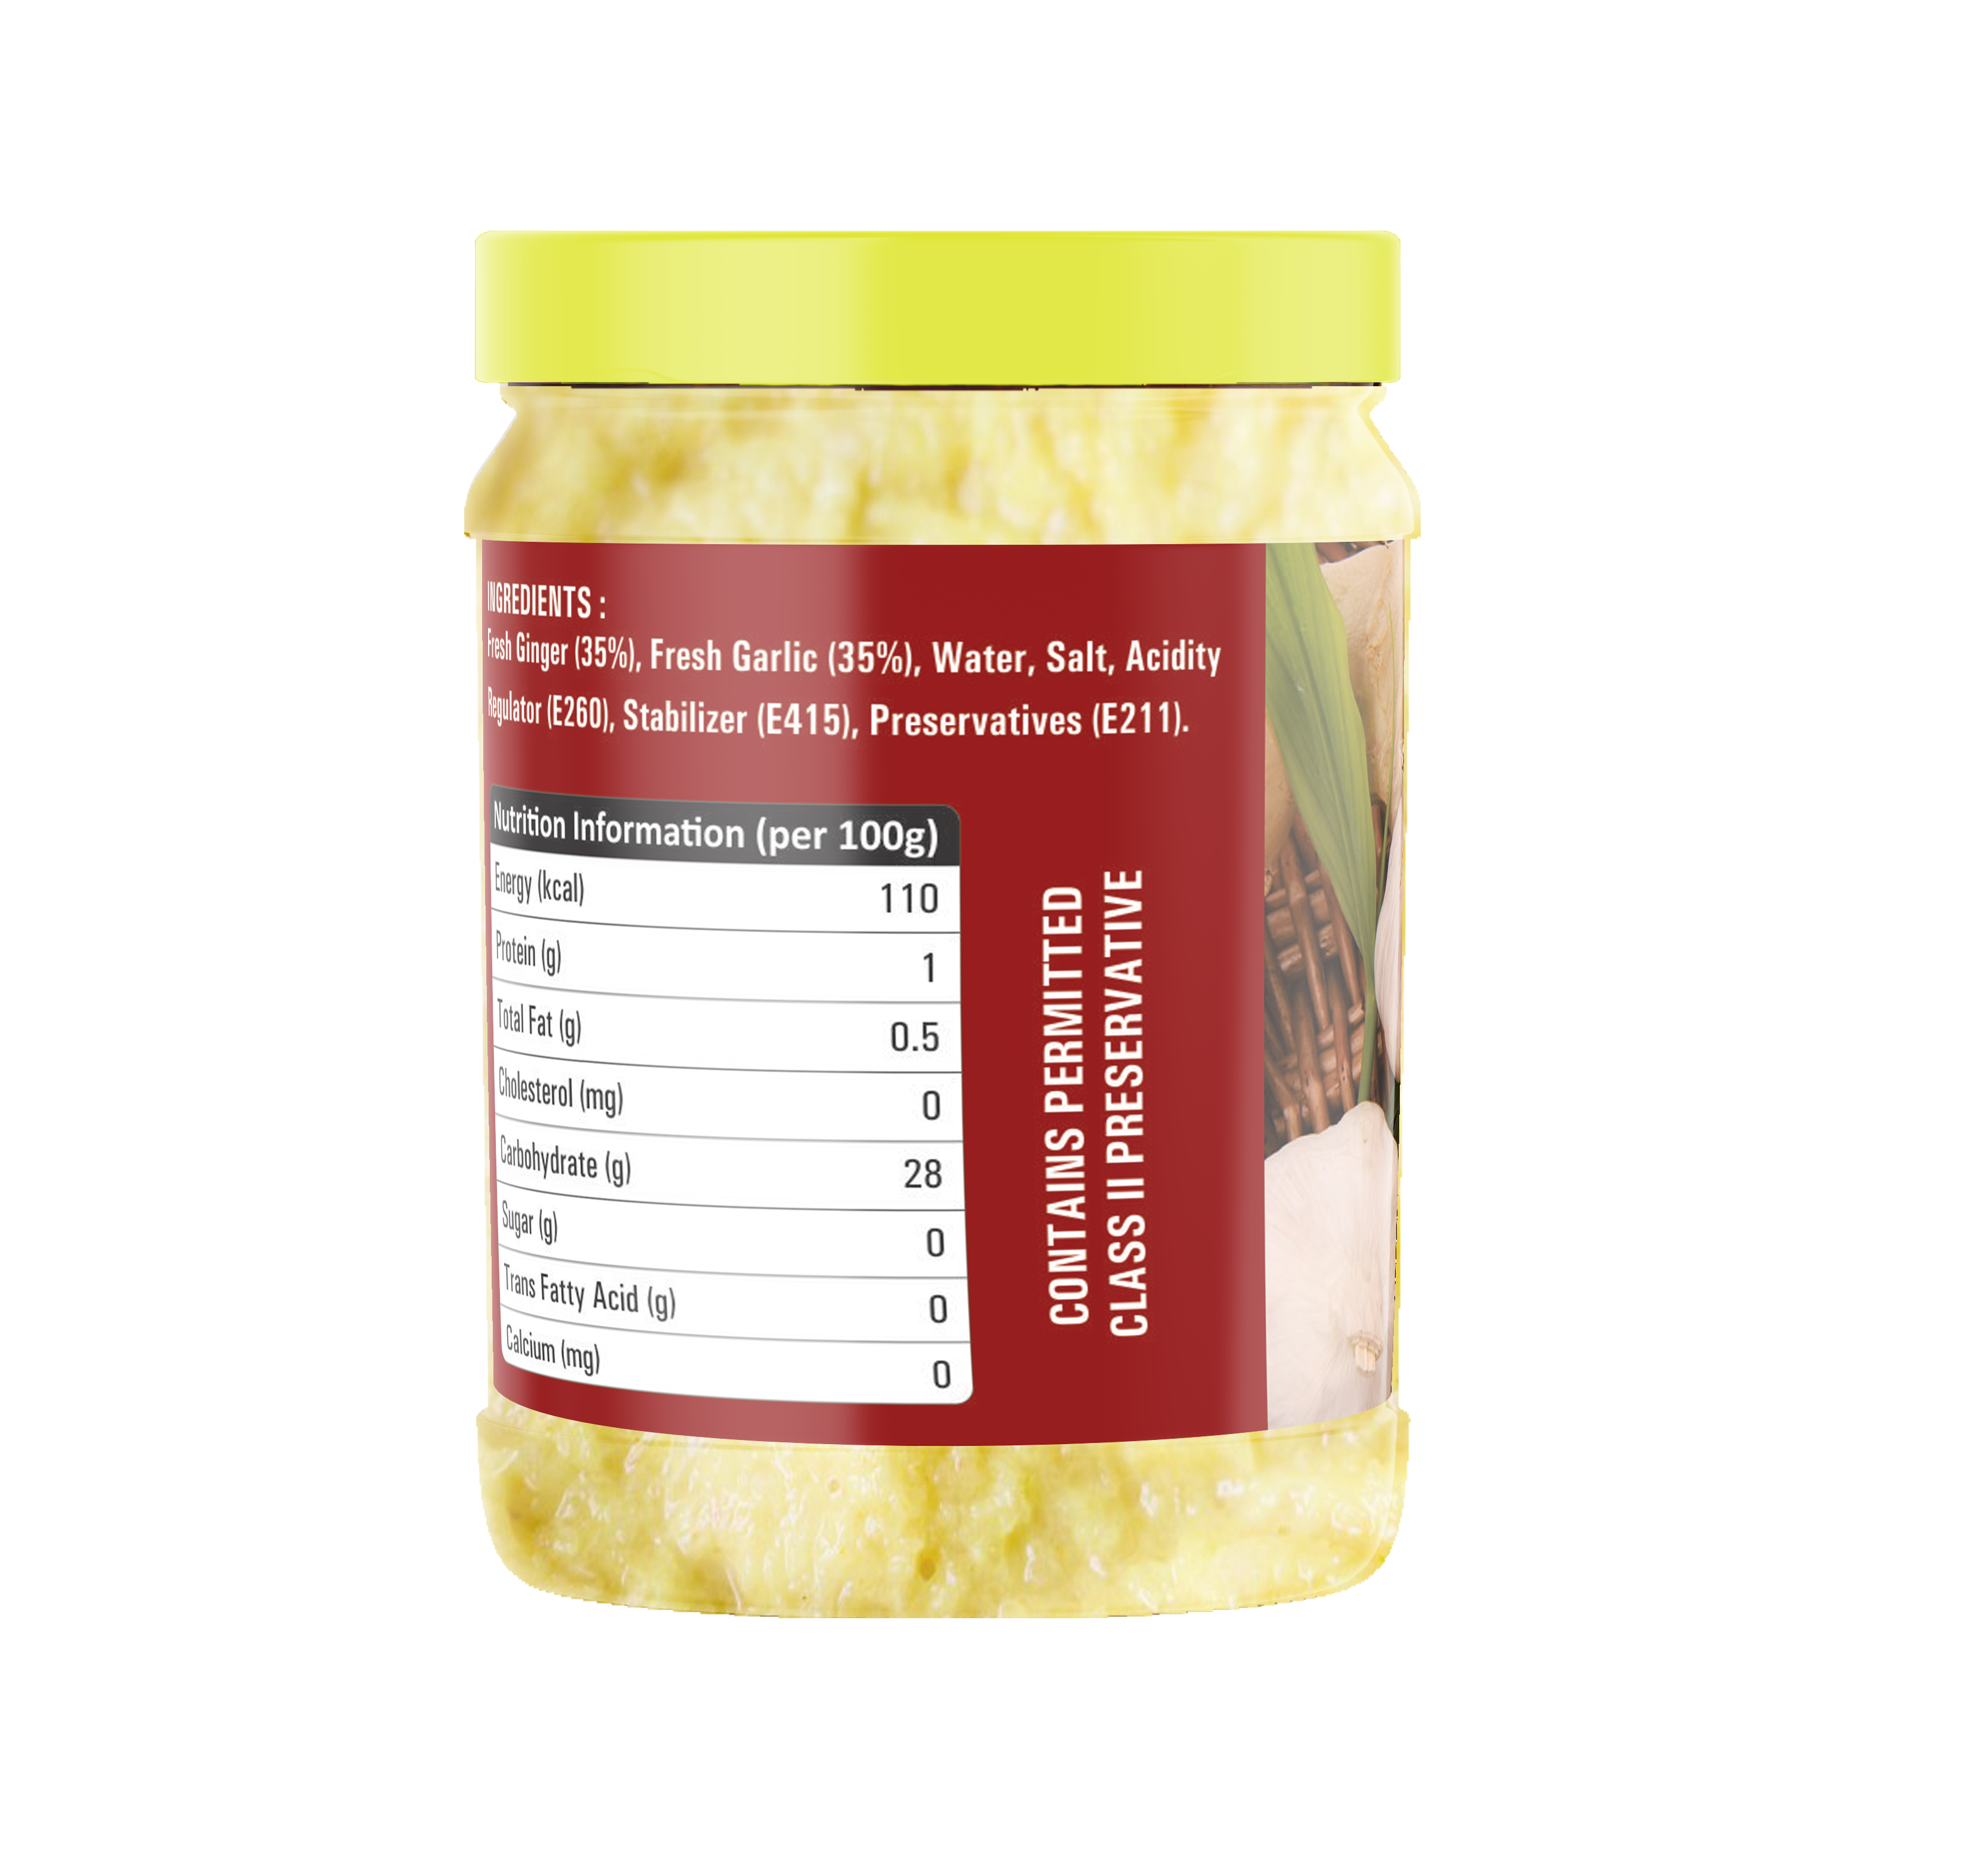 Ginger Garlic Paste Premium Quality 200gm (Pack Of 2)